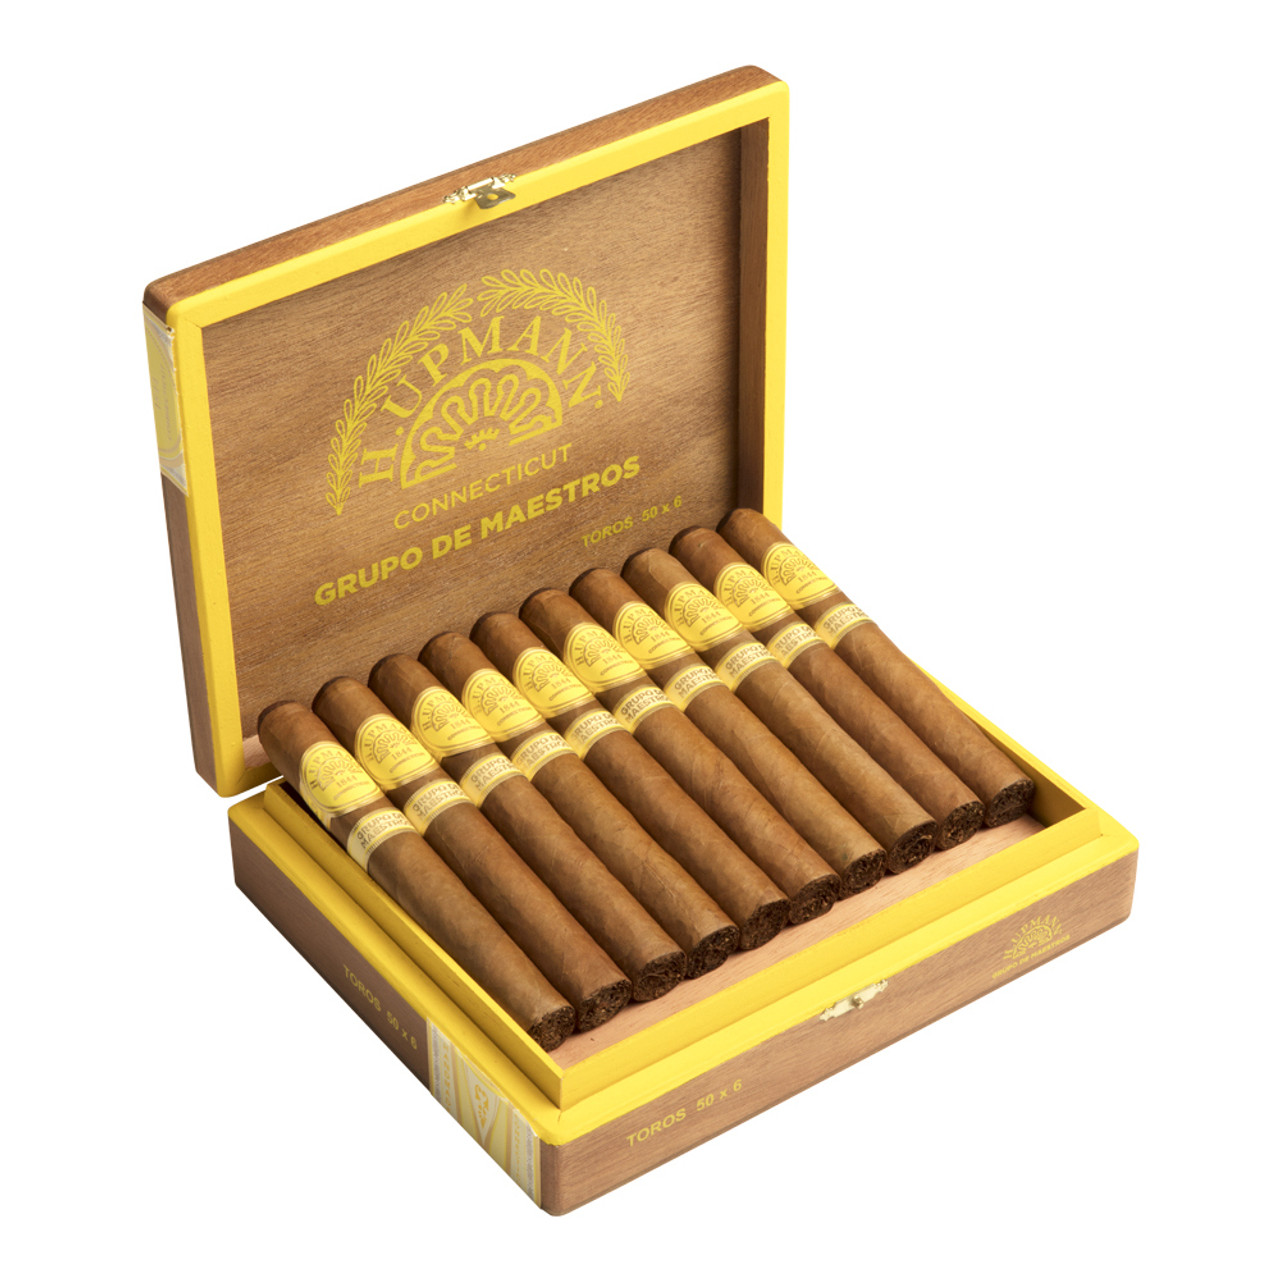 H. Upmann Connecticut Grupo de Maestros Churchill Cigars - 6.75 x 48 (Box of 20) *Box